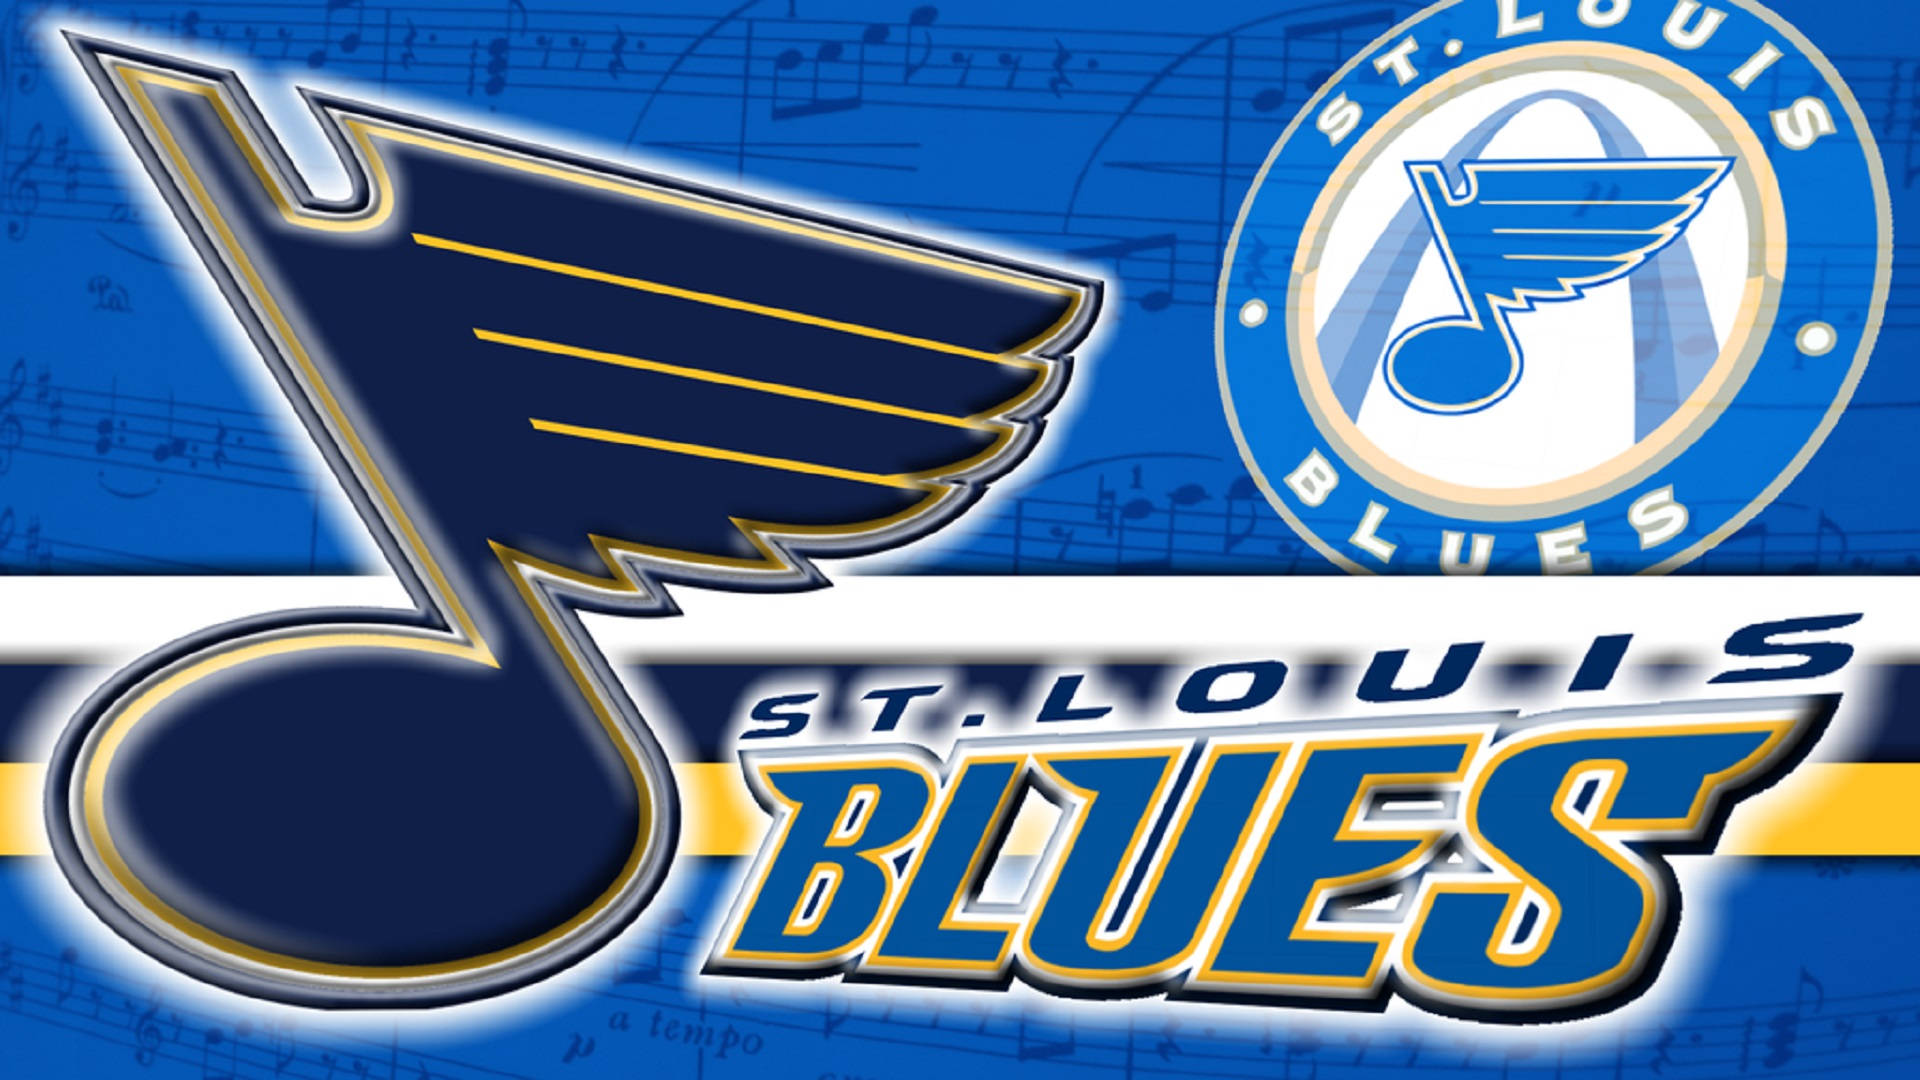 Download St Louis Blues Musical Logo Wallpaper